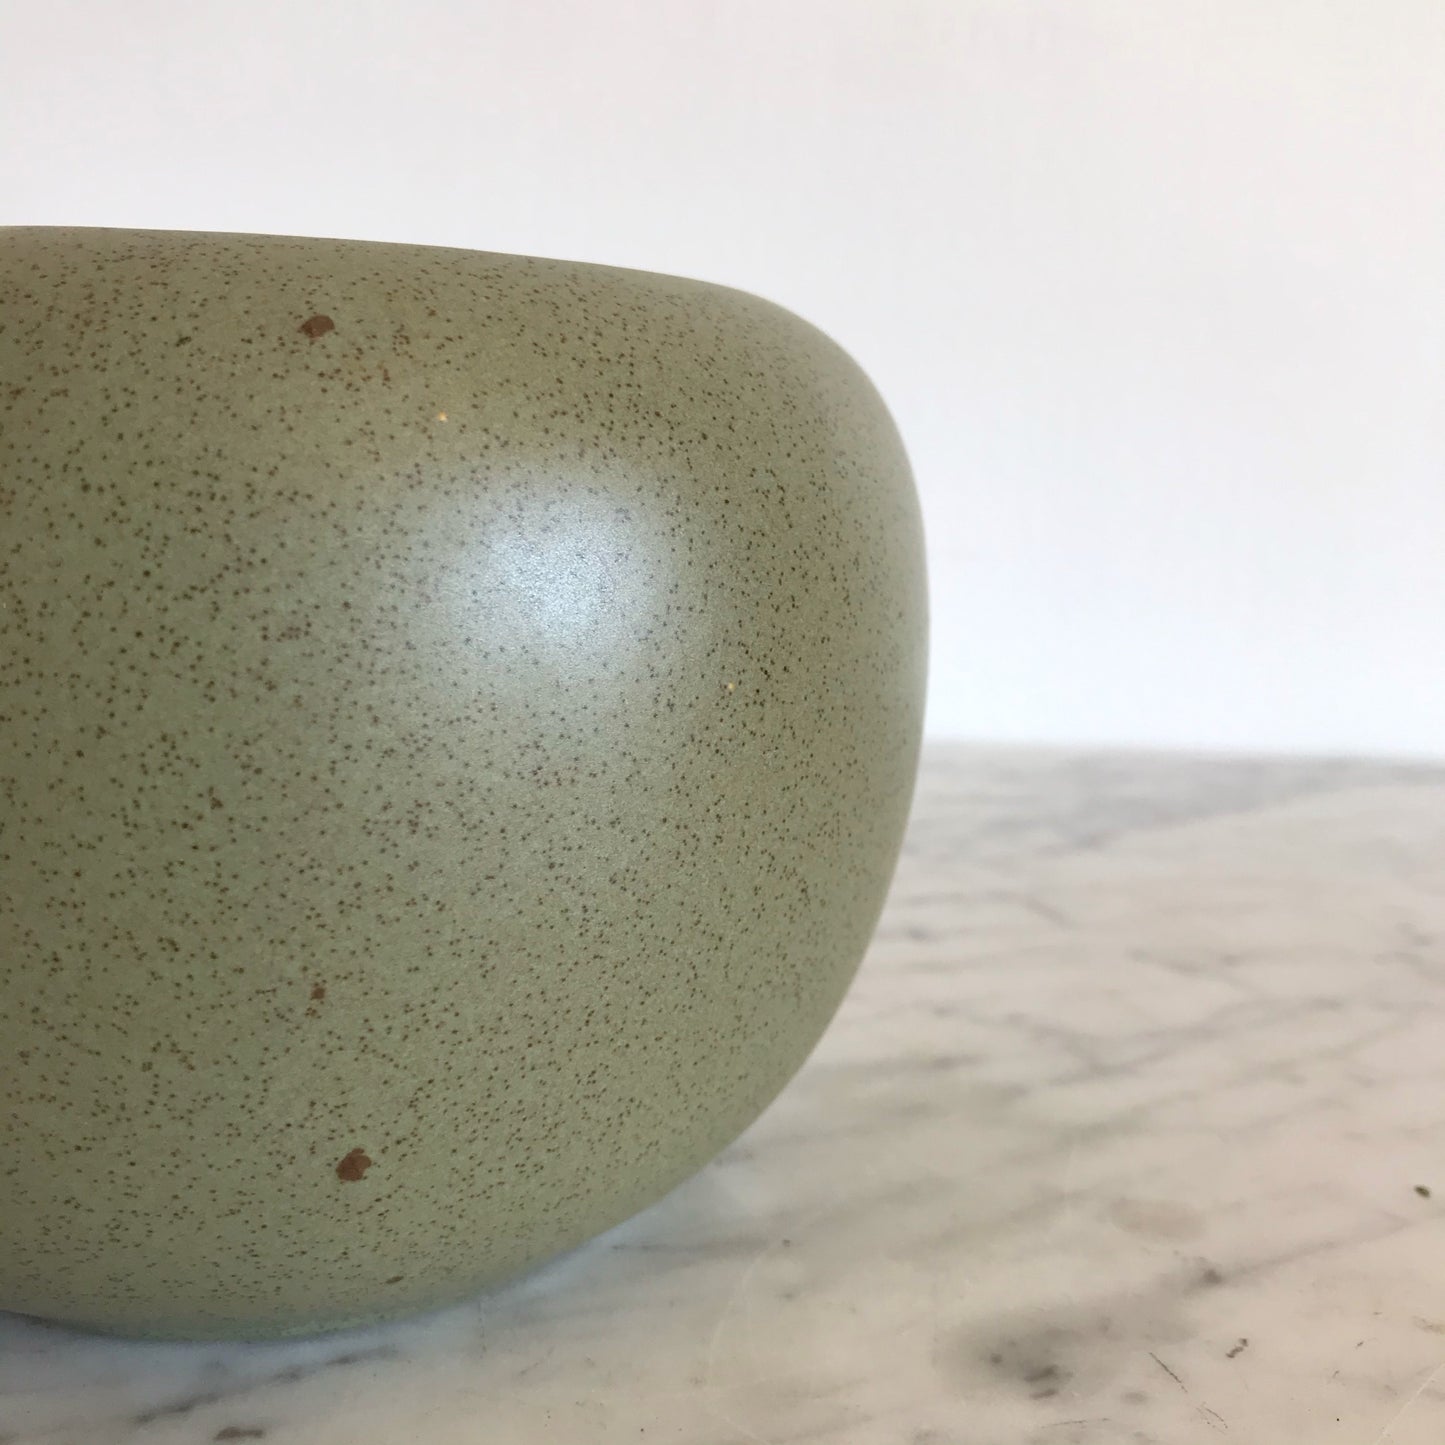 Vintage Sphere Ceramic Planter, Sage Green